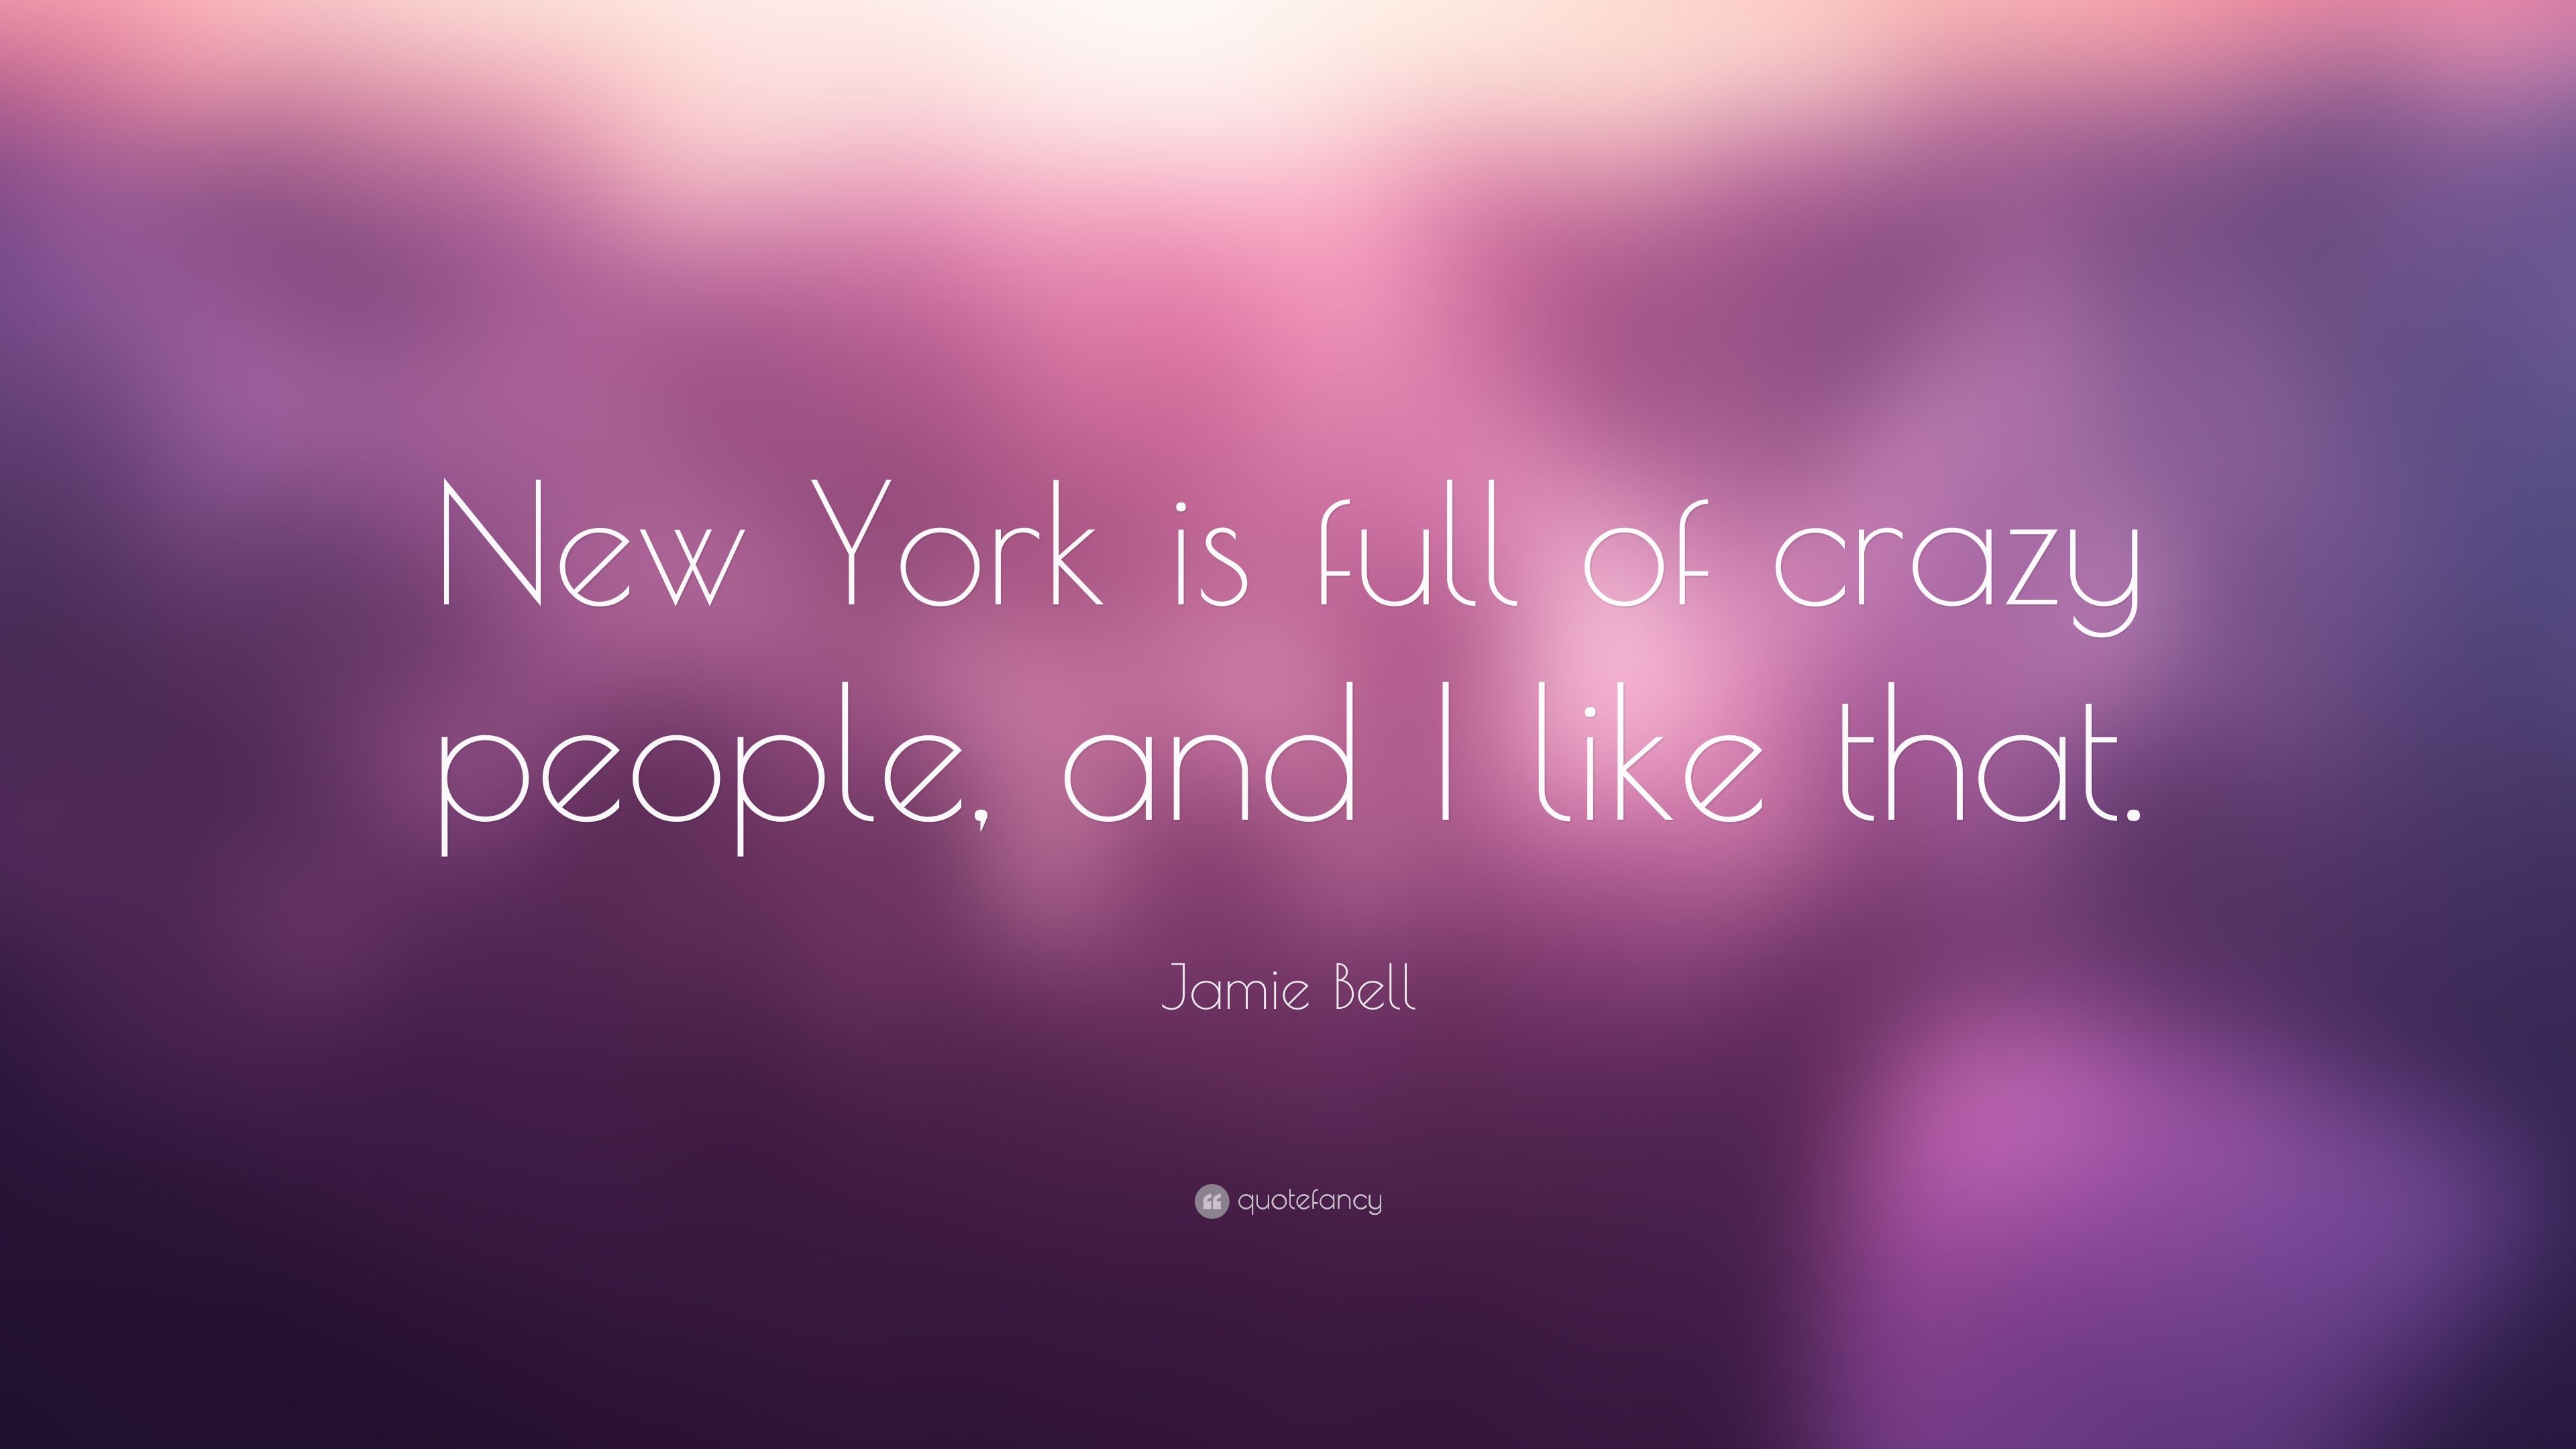 Jamie Bell Quote: “New York is fullquotefancy.com